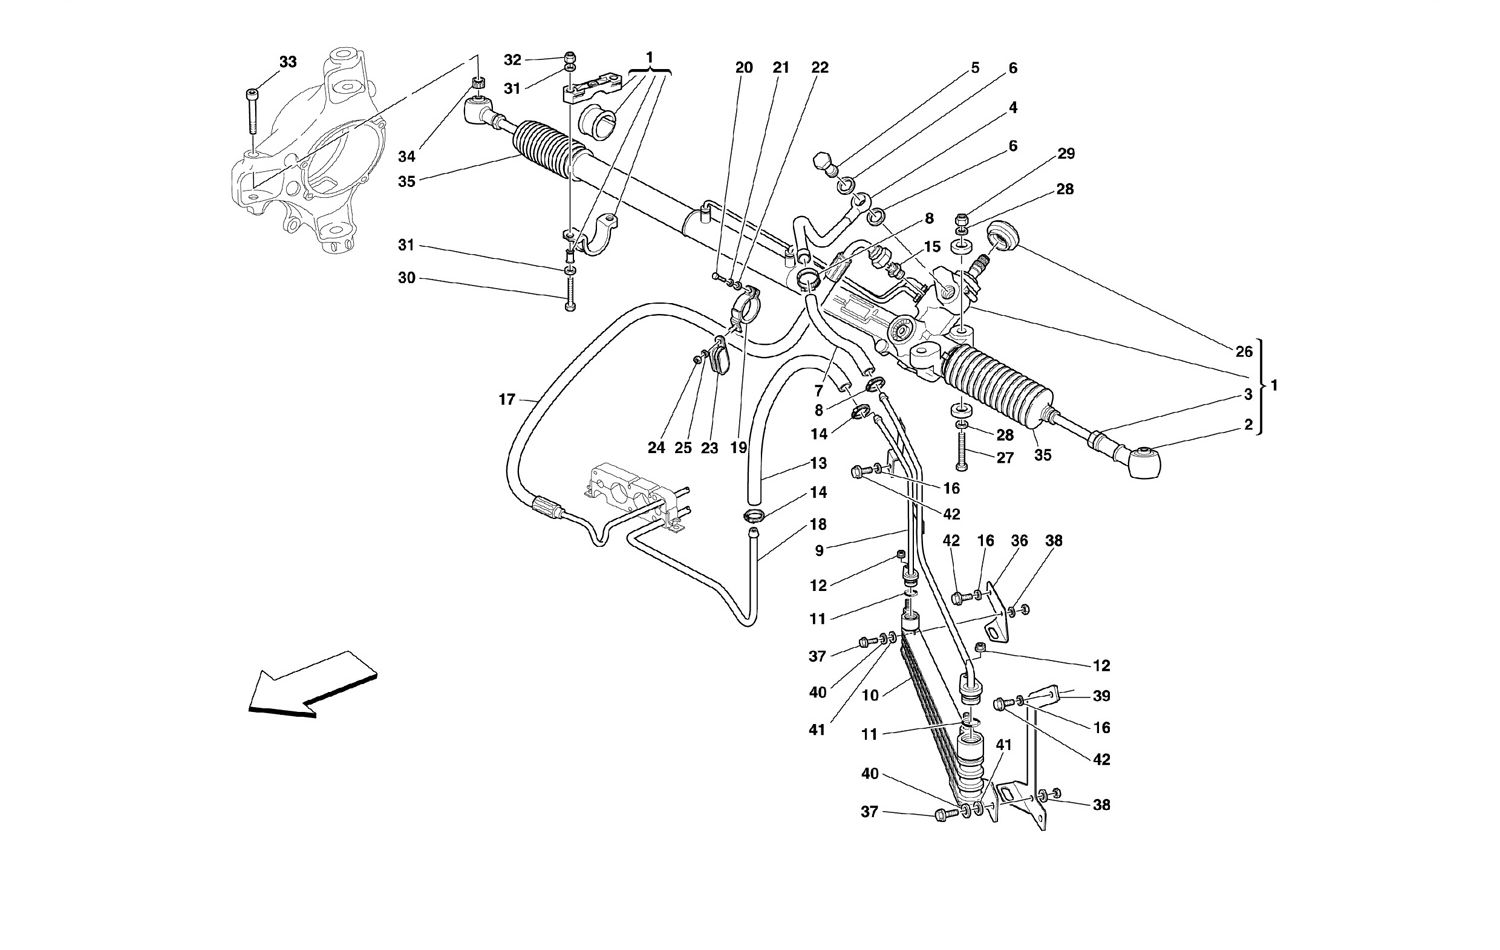 Schematic: Hydraulic Steering Box And Serpentine